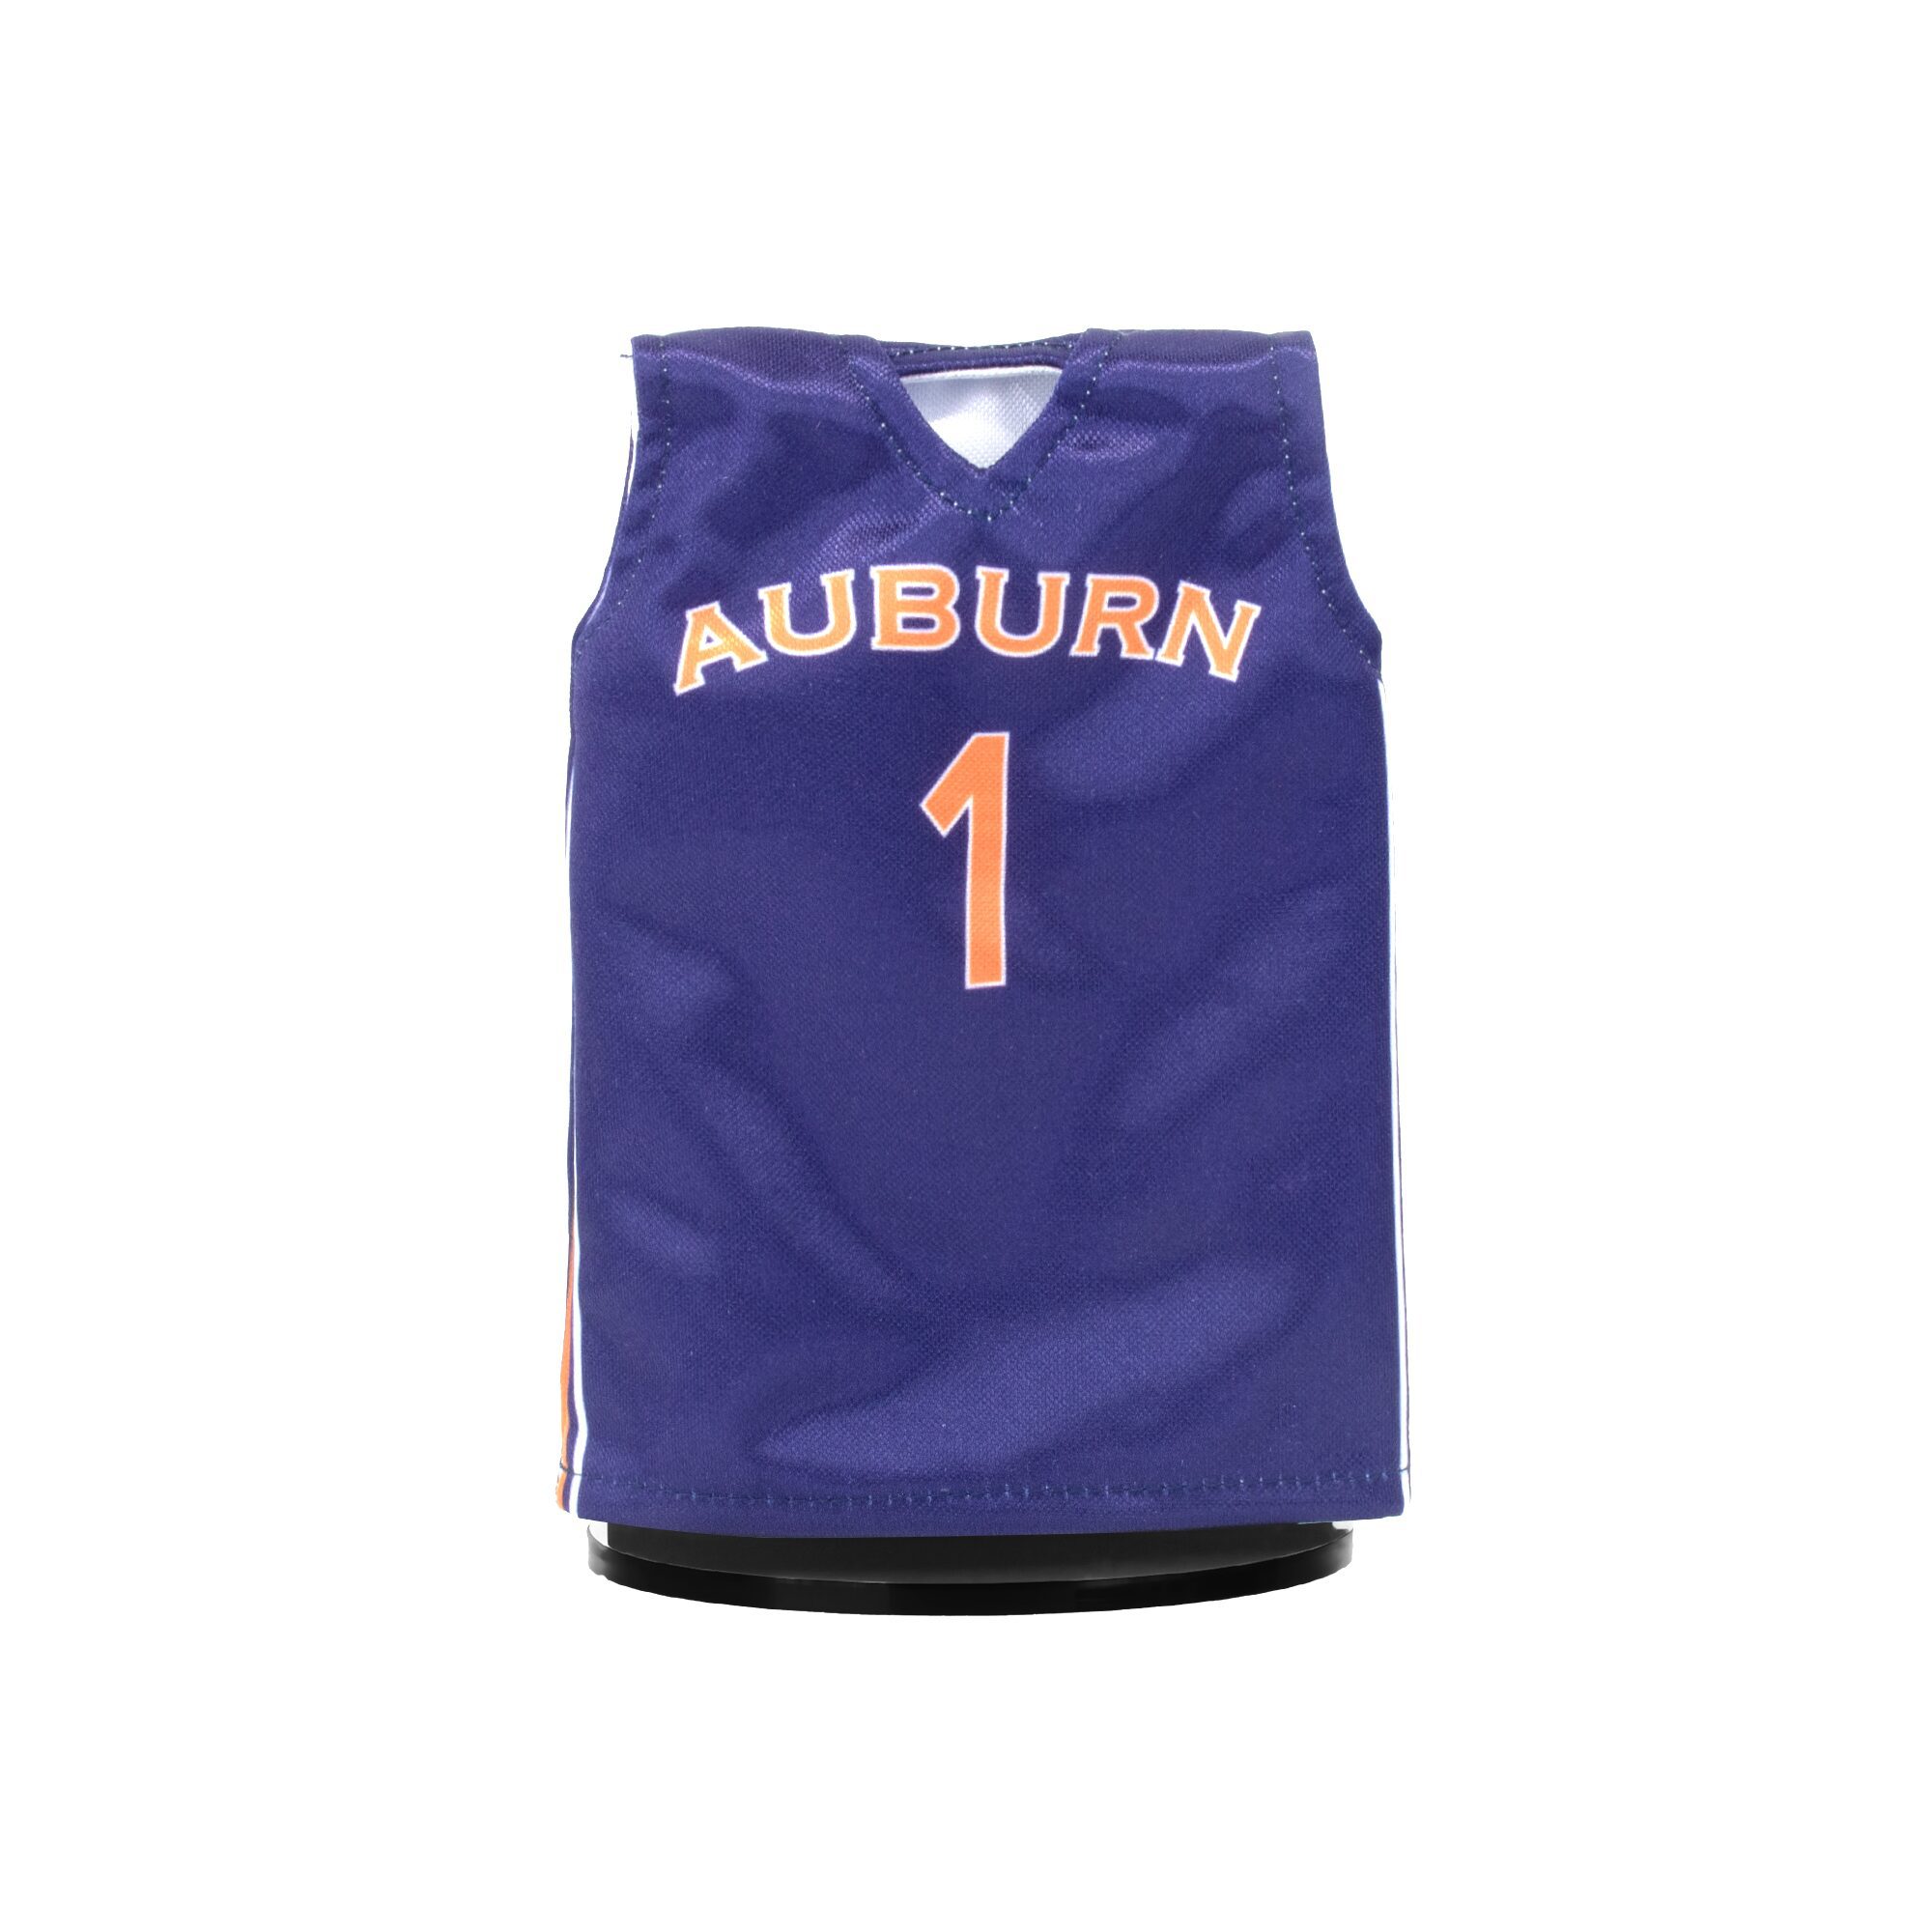 Auburn Basketball Miniature Blue Jersey